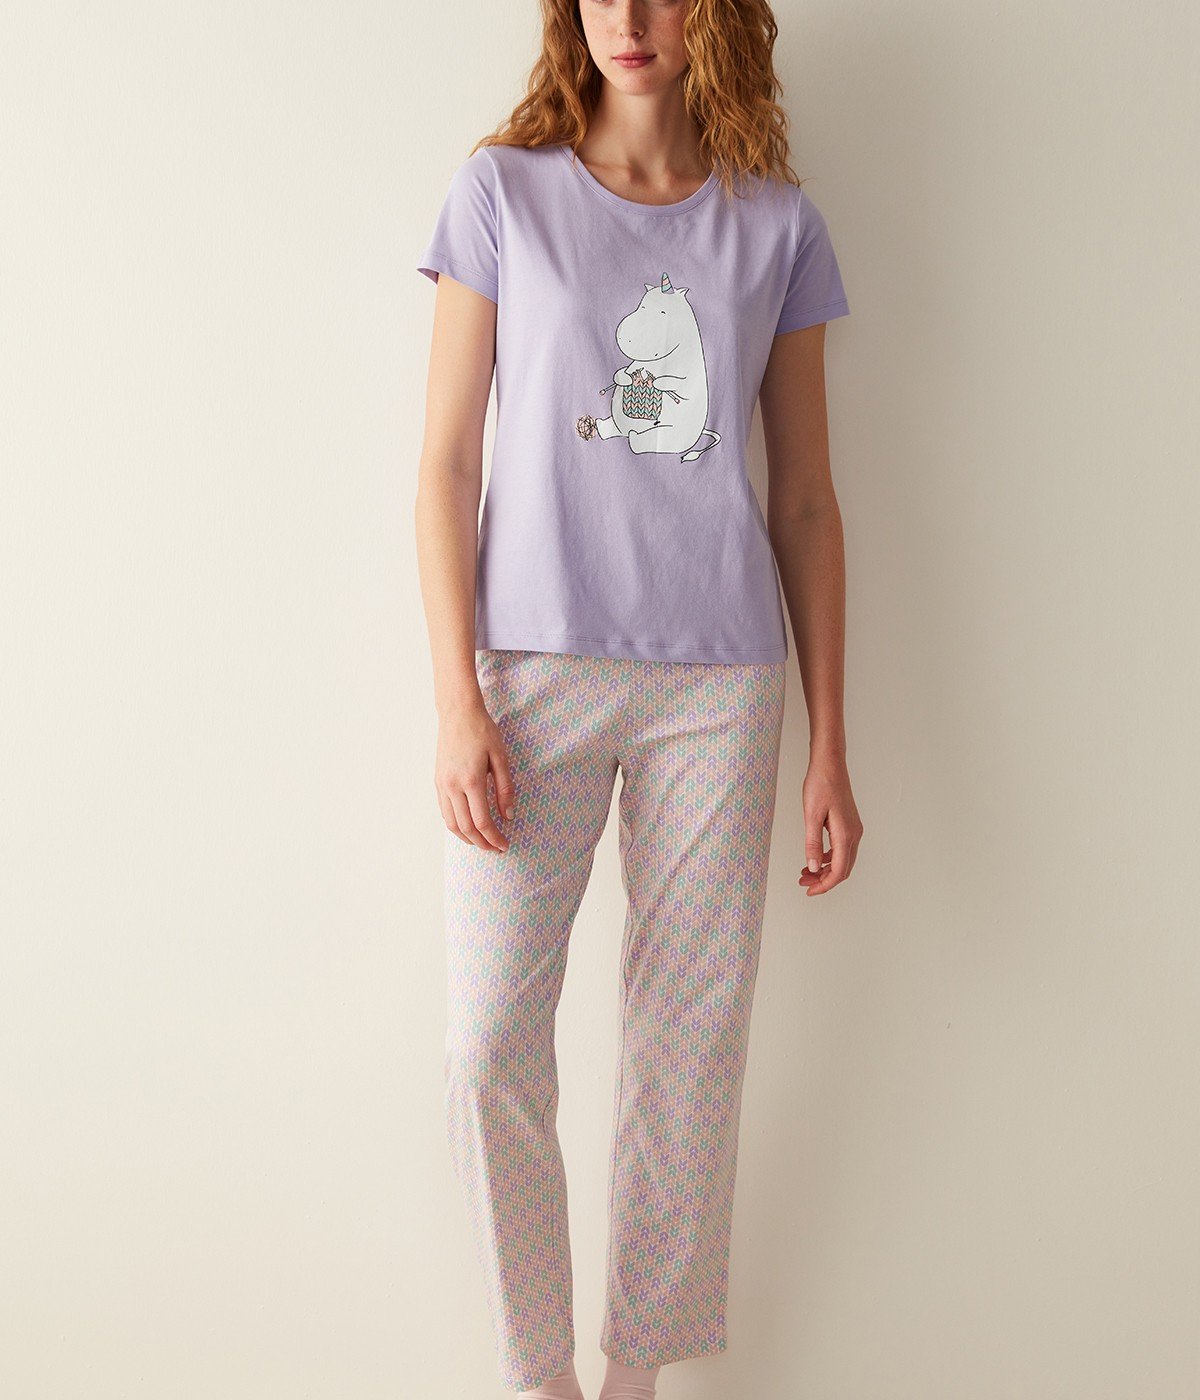 Happinies Lilac Pants PJ Set